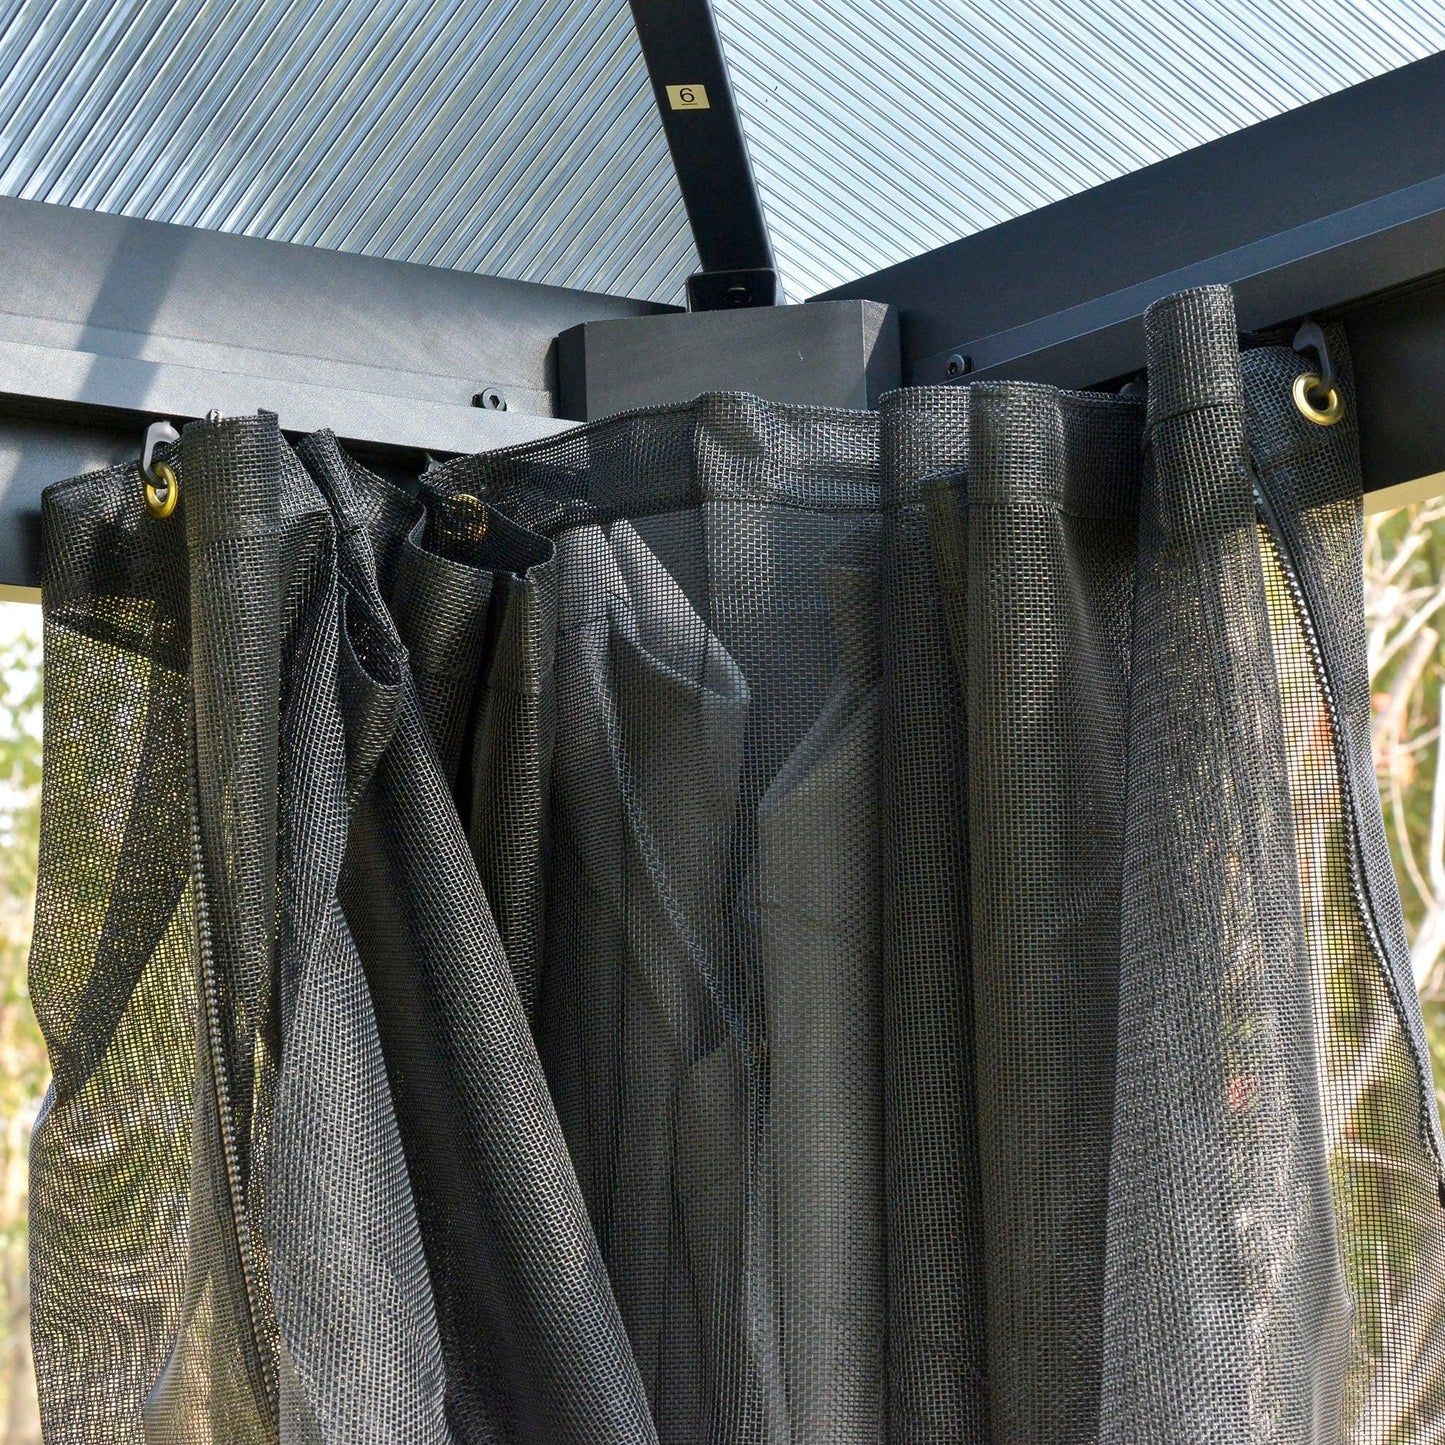 Outsunny Hardtop Gazebo with Mosquito Netting - 3x3m - ALL4U RETAILER LTD